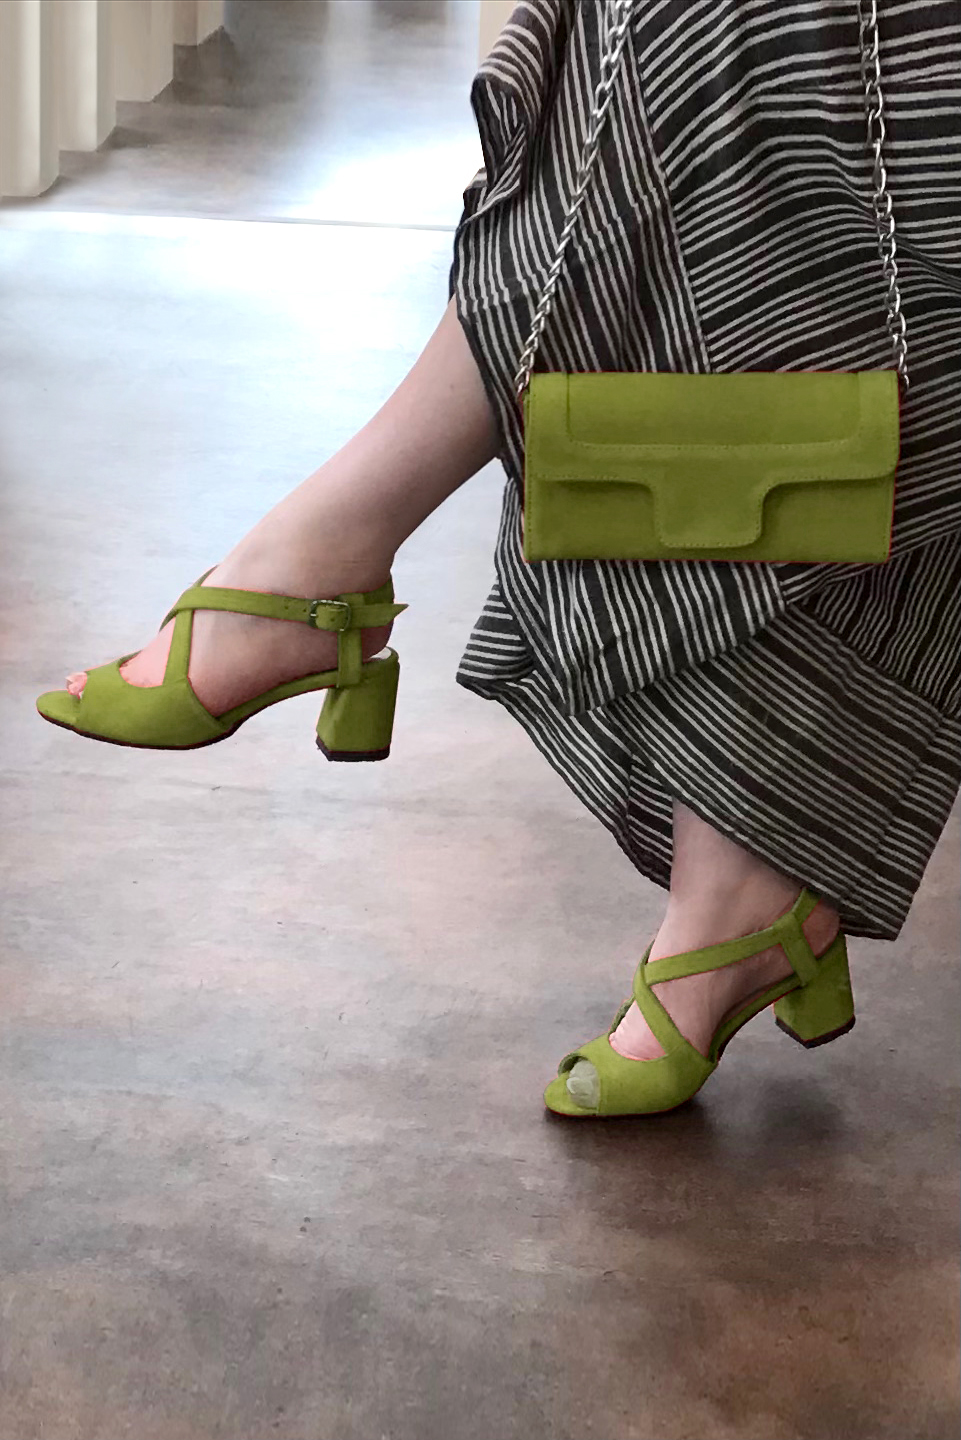 Pistachio green women's open back sandals, with crossed straps. Round toe. Medium flare heels. Worn view - Florence KOOIJMAN